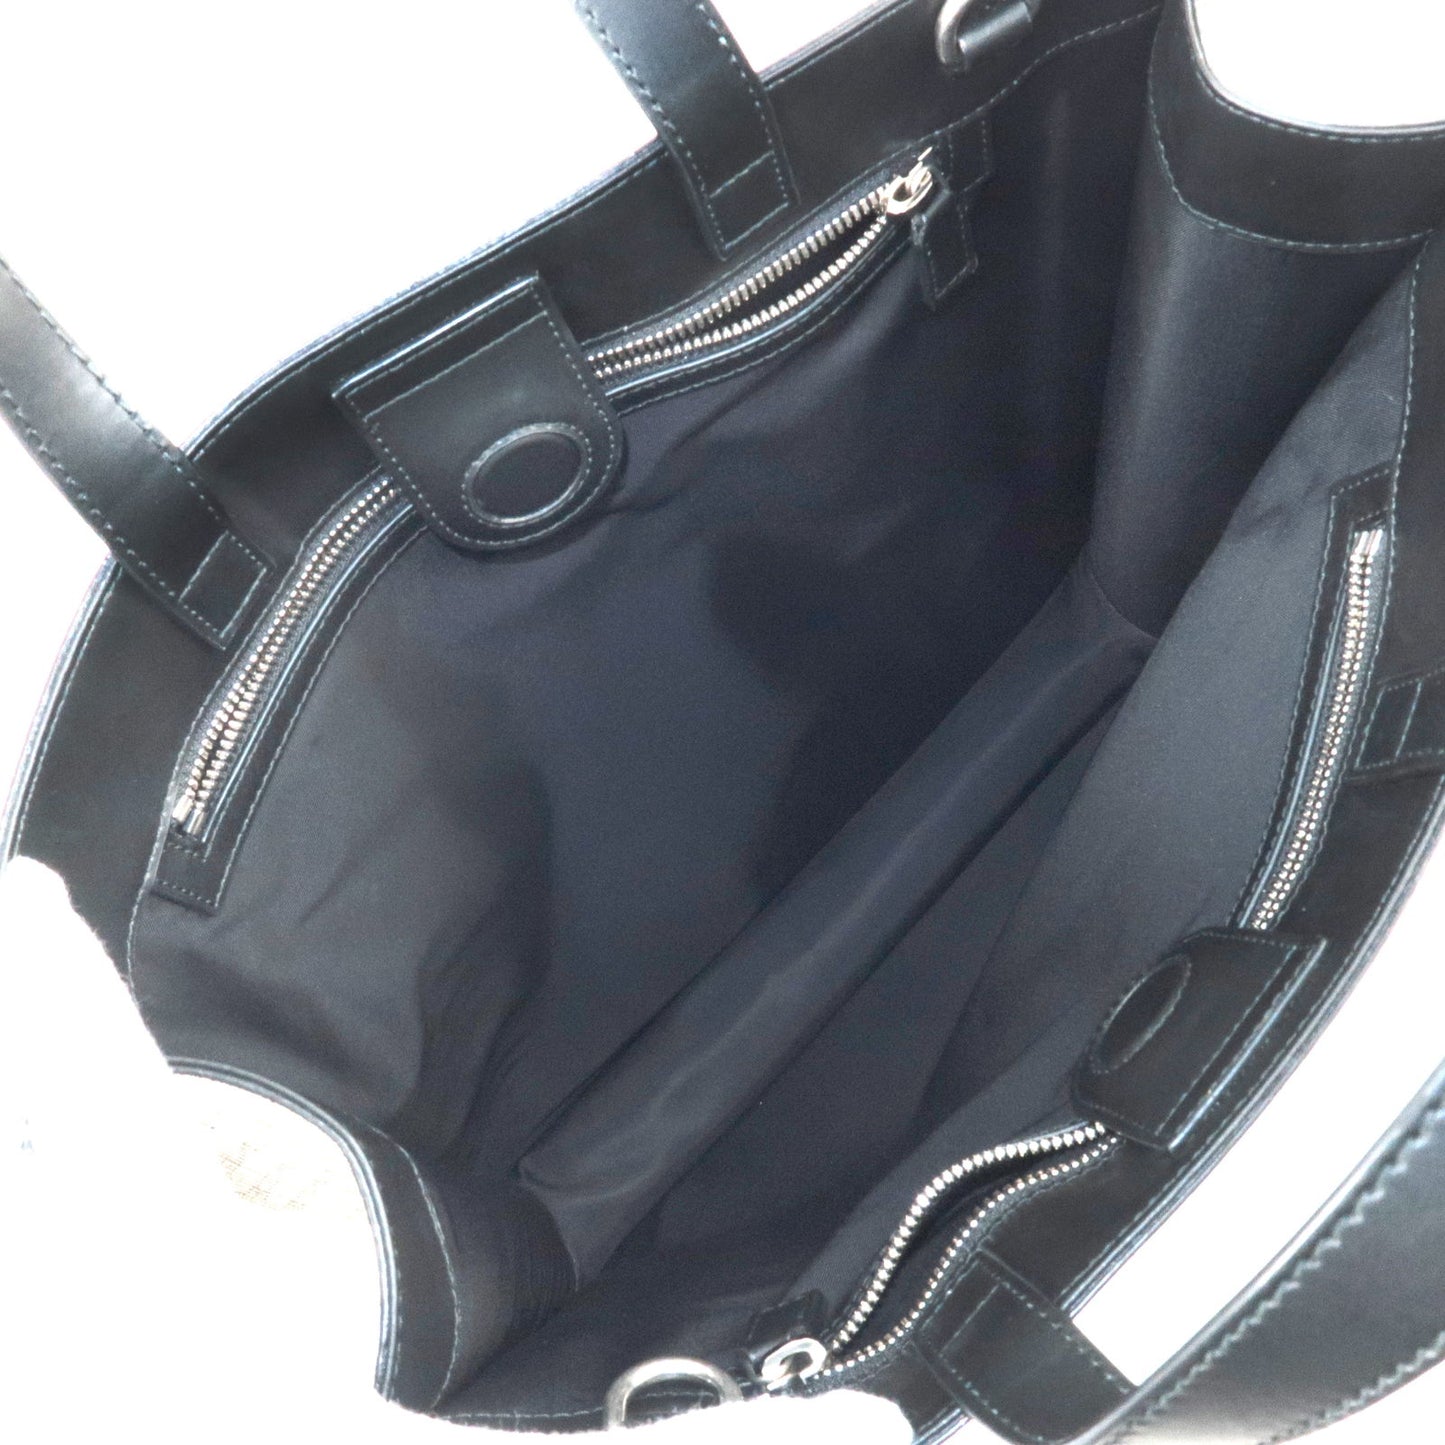 GUCCI GG Supreme Leather 2Way Bag Hand Bag Beige Brown 429019